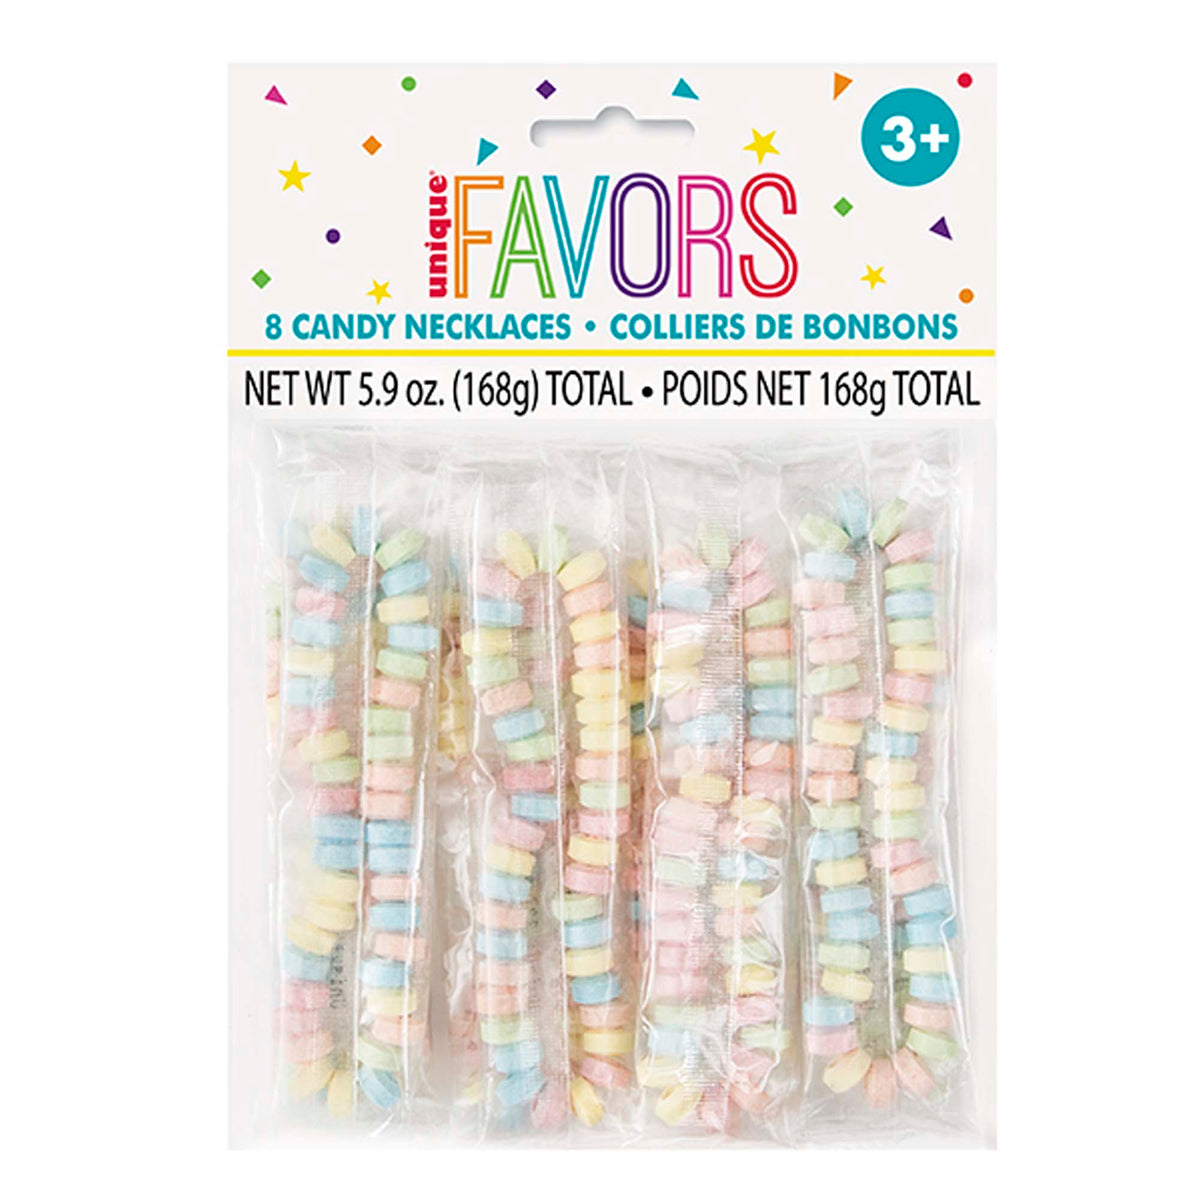 UNIQUE PARTY FAVORS impulse buying Candy Necklaces, 8 Count 011179848003